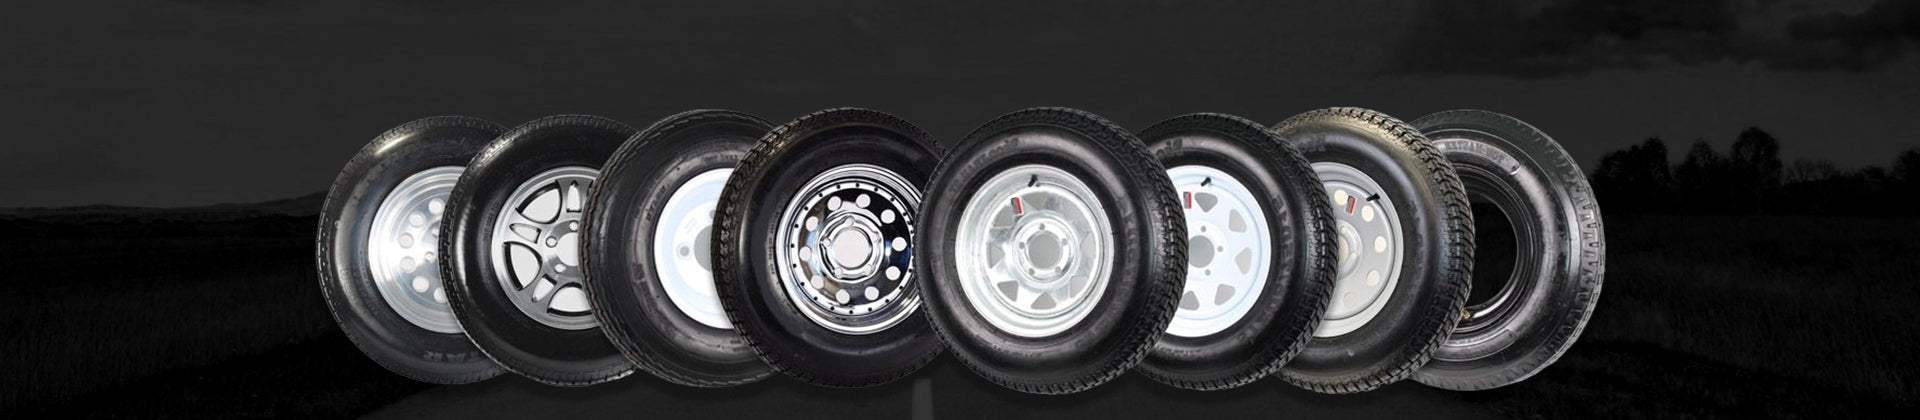 Tire & Wheel Information